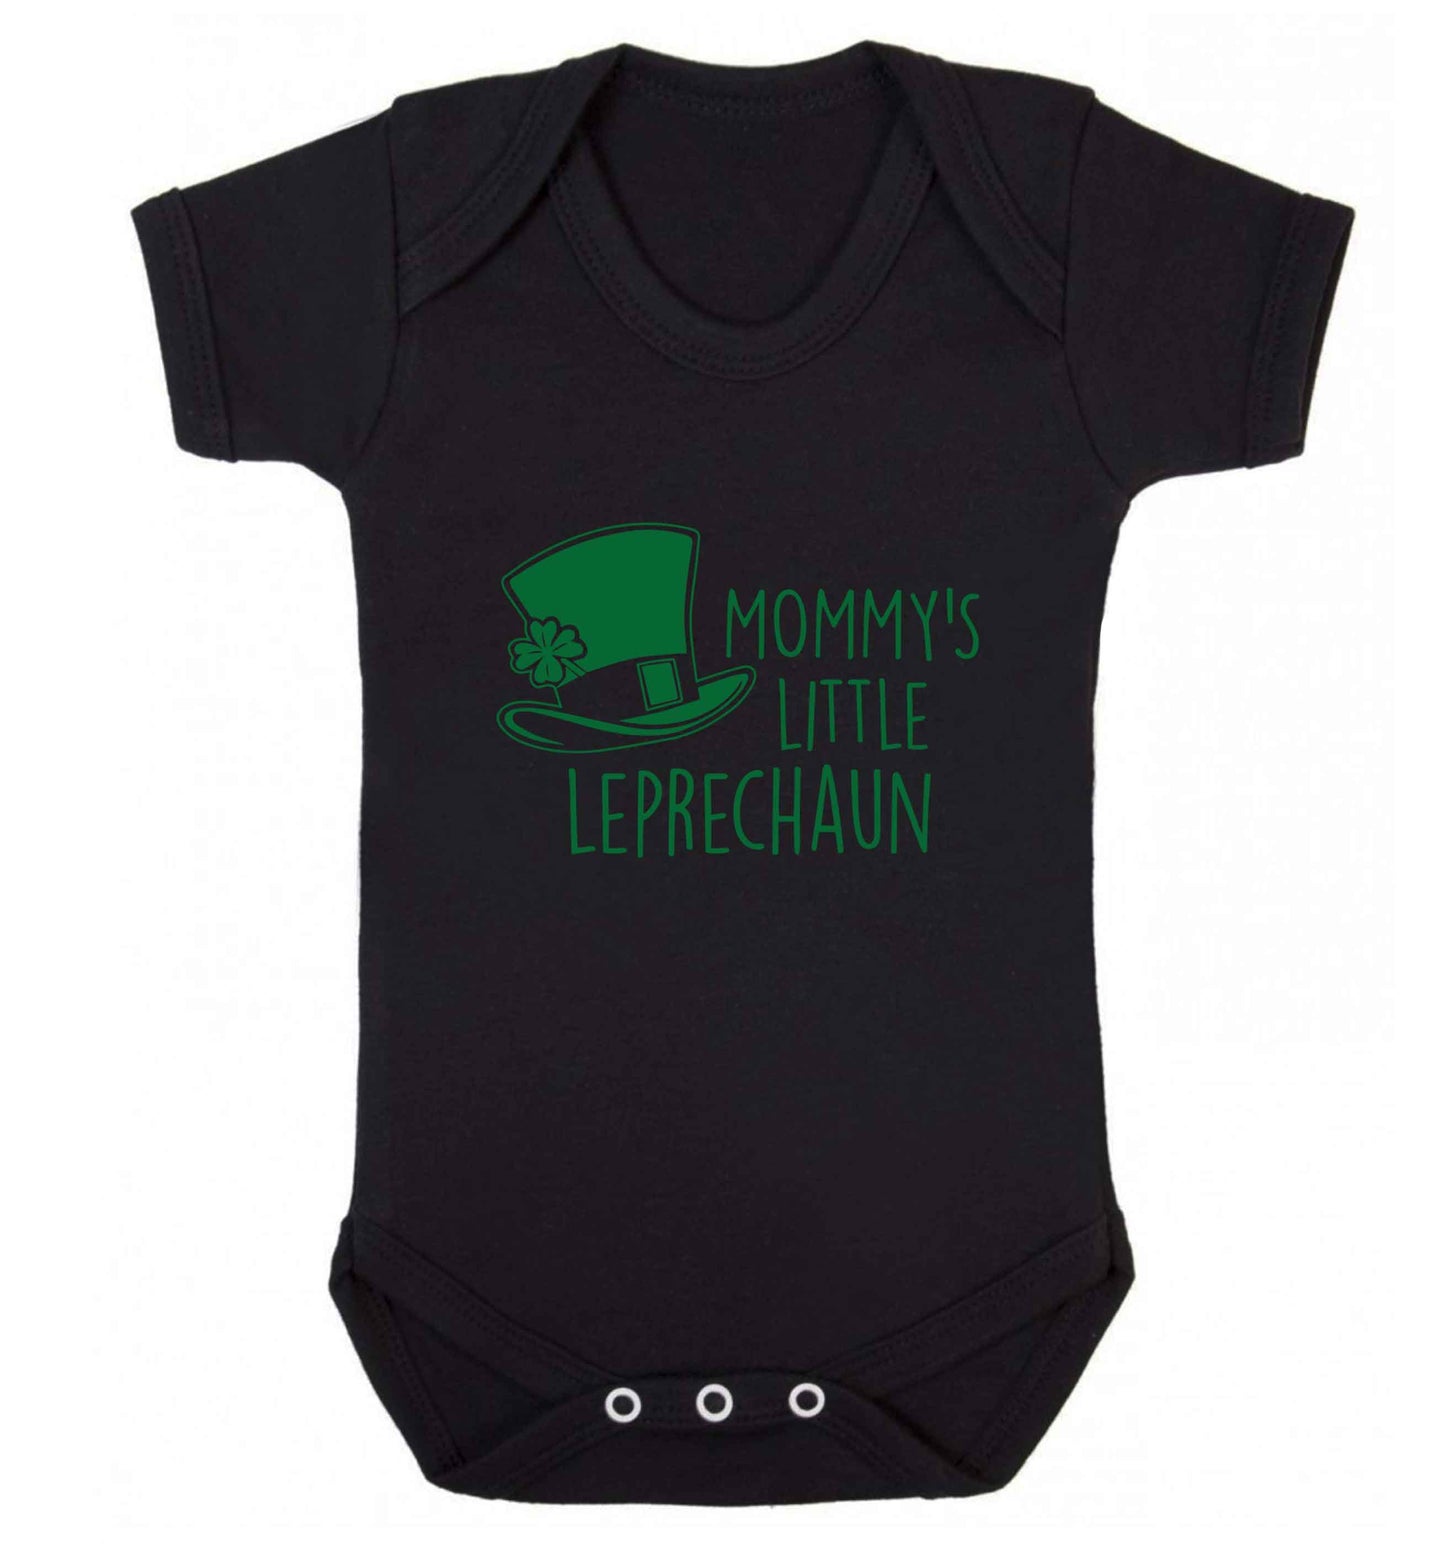 Mommy's little leprechaun baby vest black 18-24 months